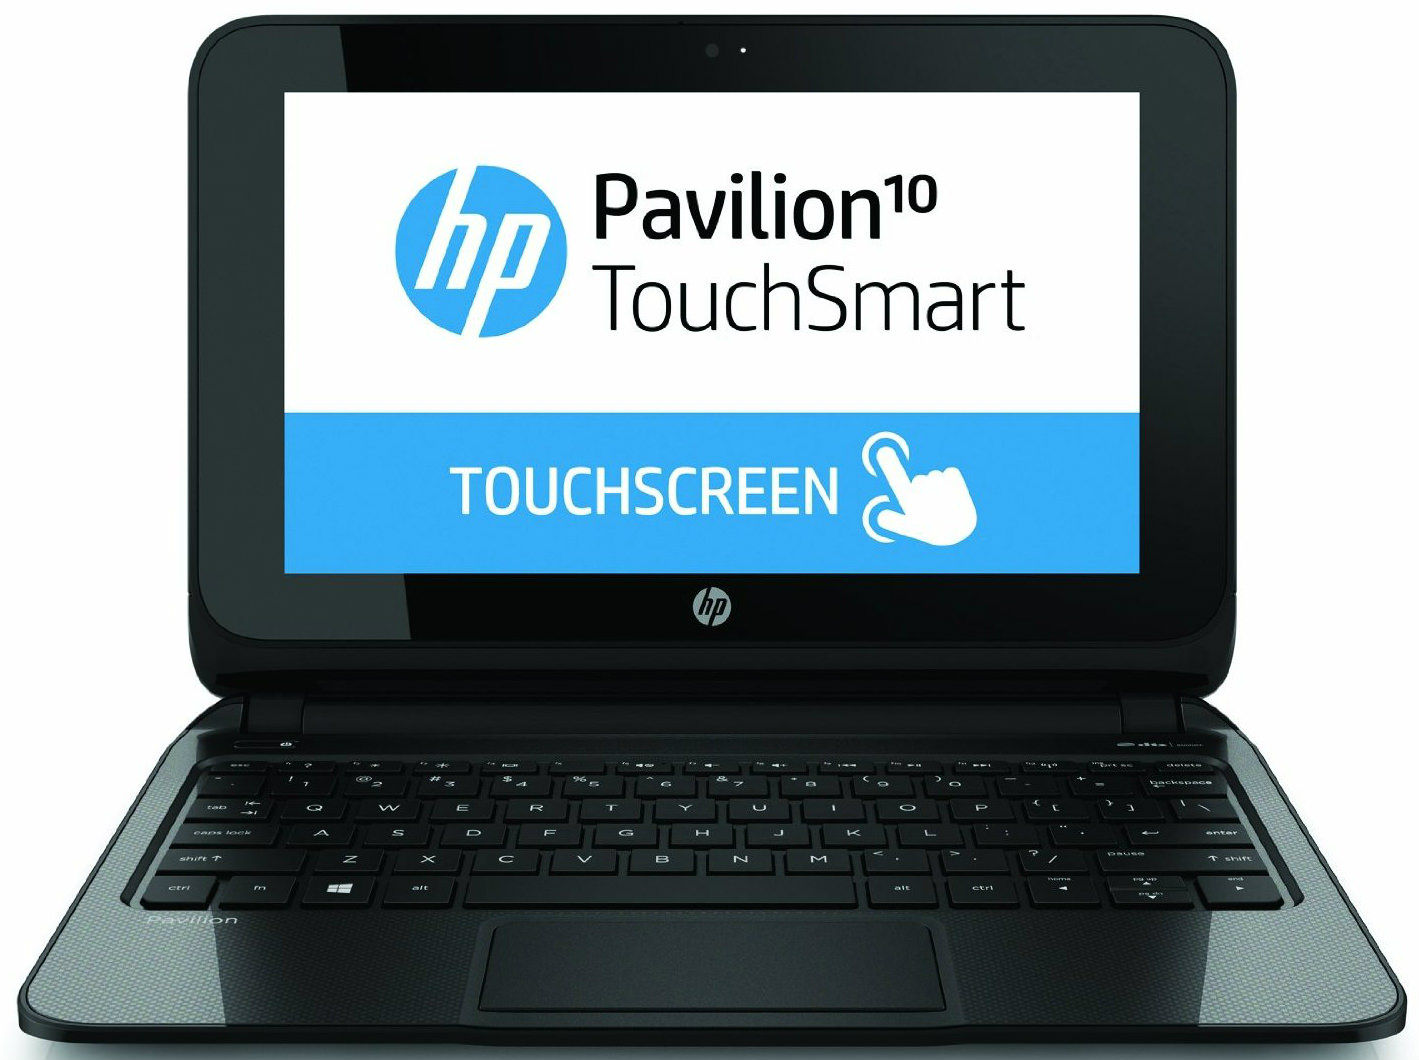 HP Pavilion TouchSmart 10-e010nr (F3F15UA) Laptop (AMD Dual Core/2 GB/320 GB/Windows 8 1/1 GB) Price